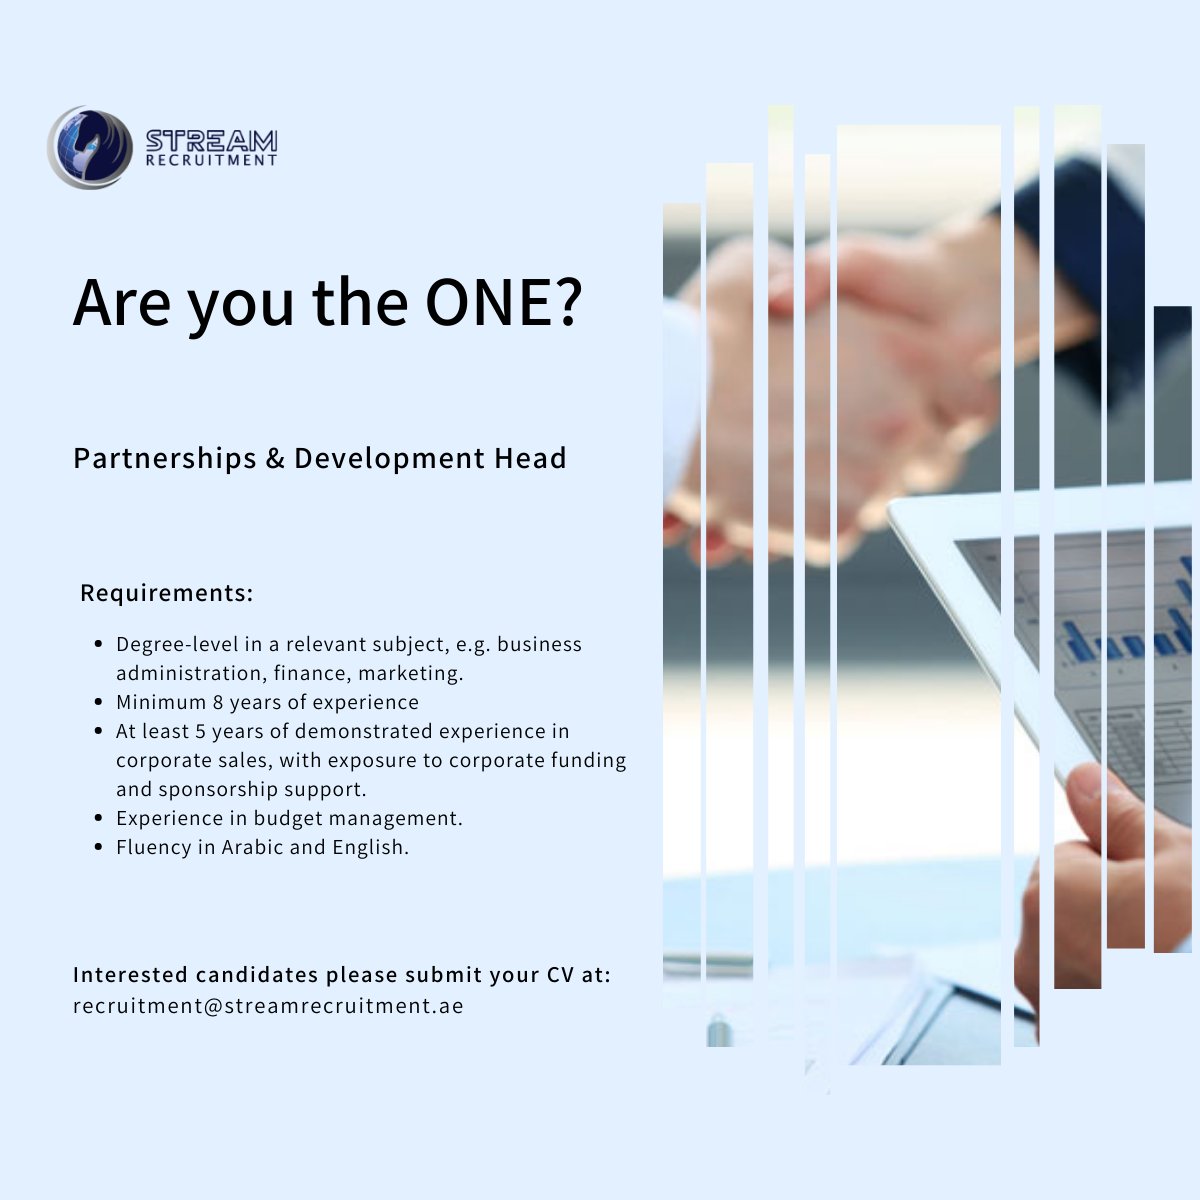 #streamrecruitment #hiring #uae #uaerecruitment #partnership #abudhabi #development #manager #head #2023hiring #jobs #career #receuitment #job #opportunity #wearehiring